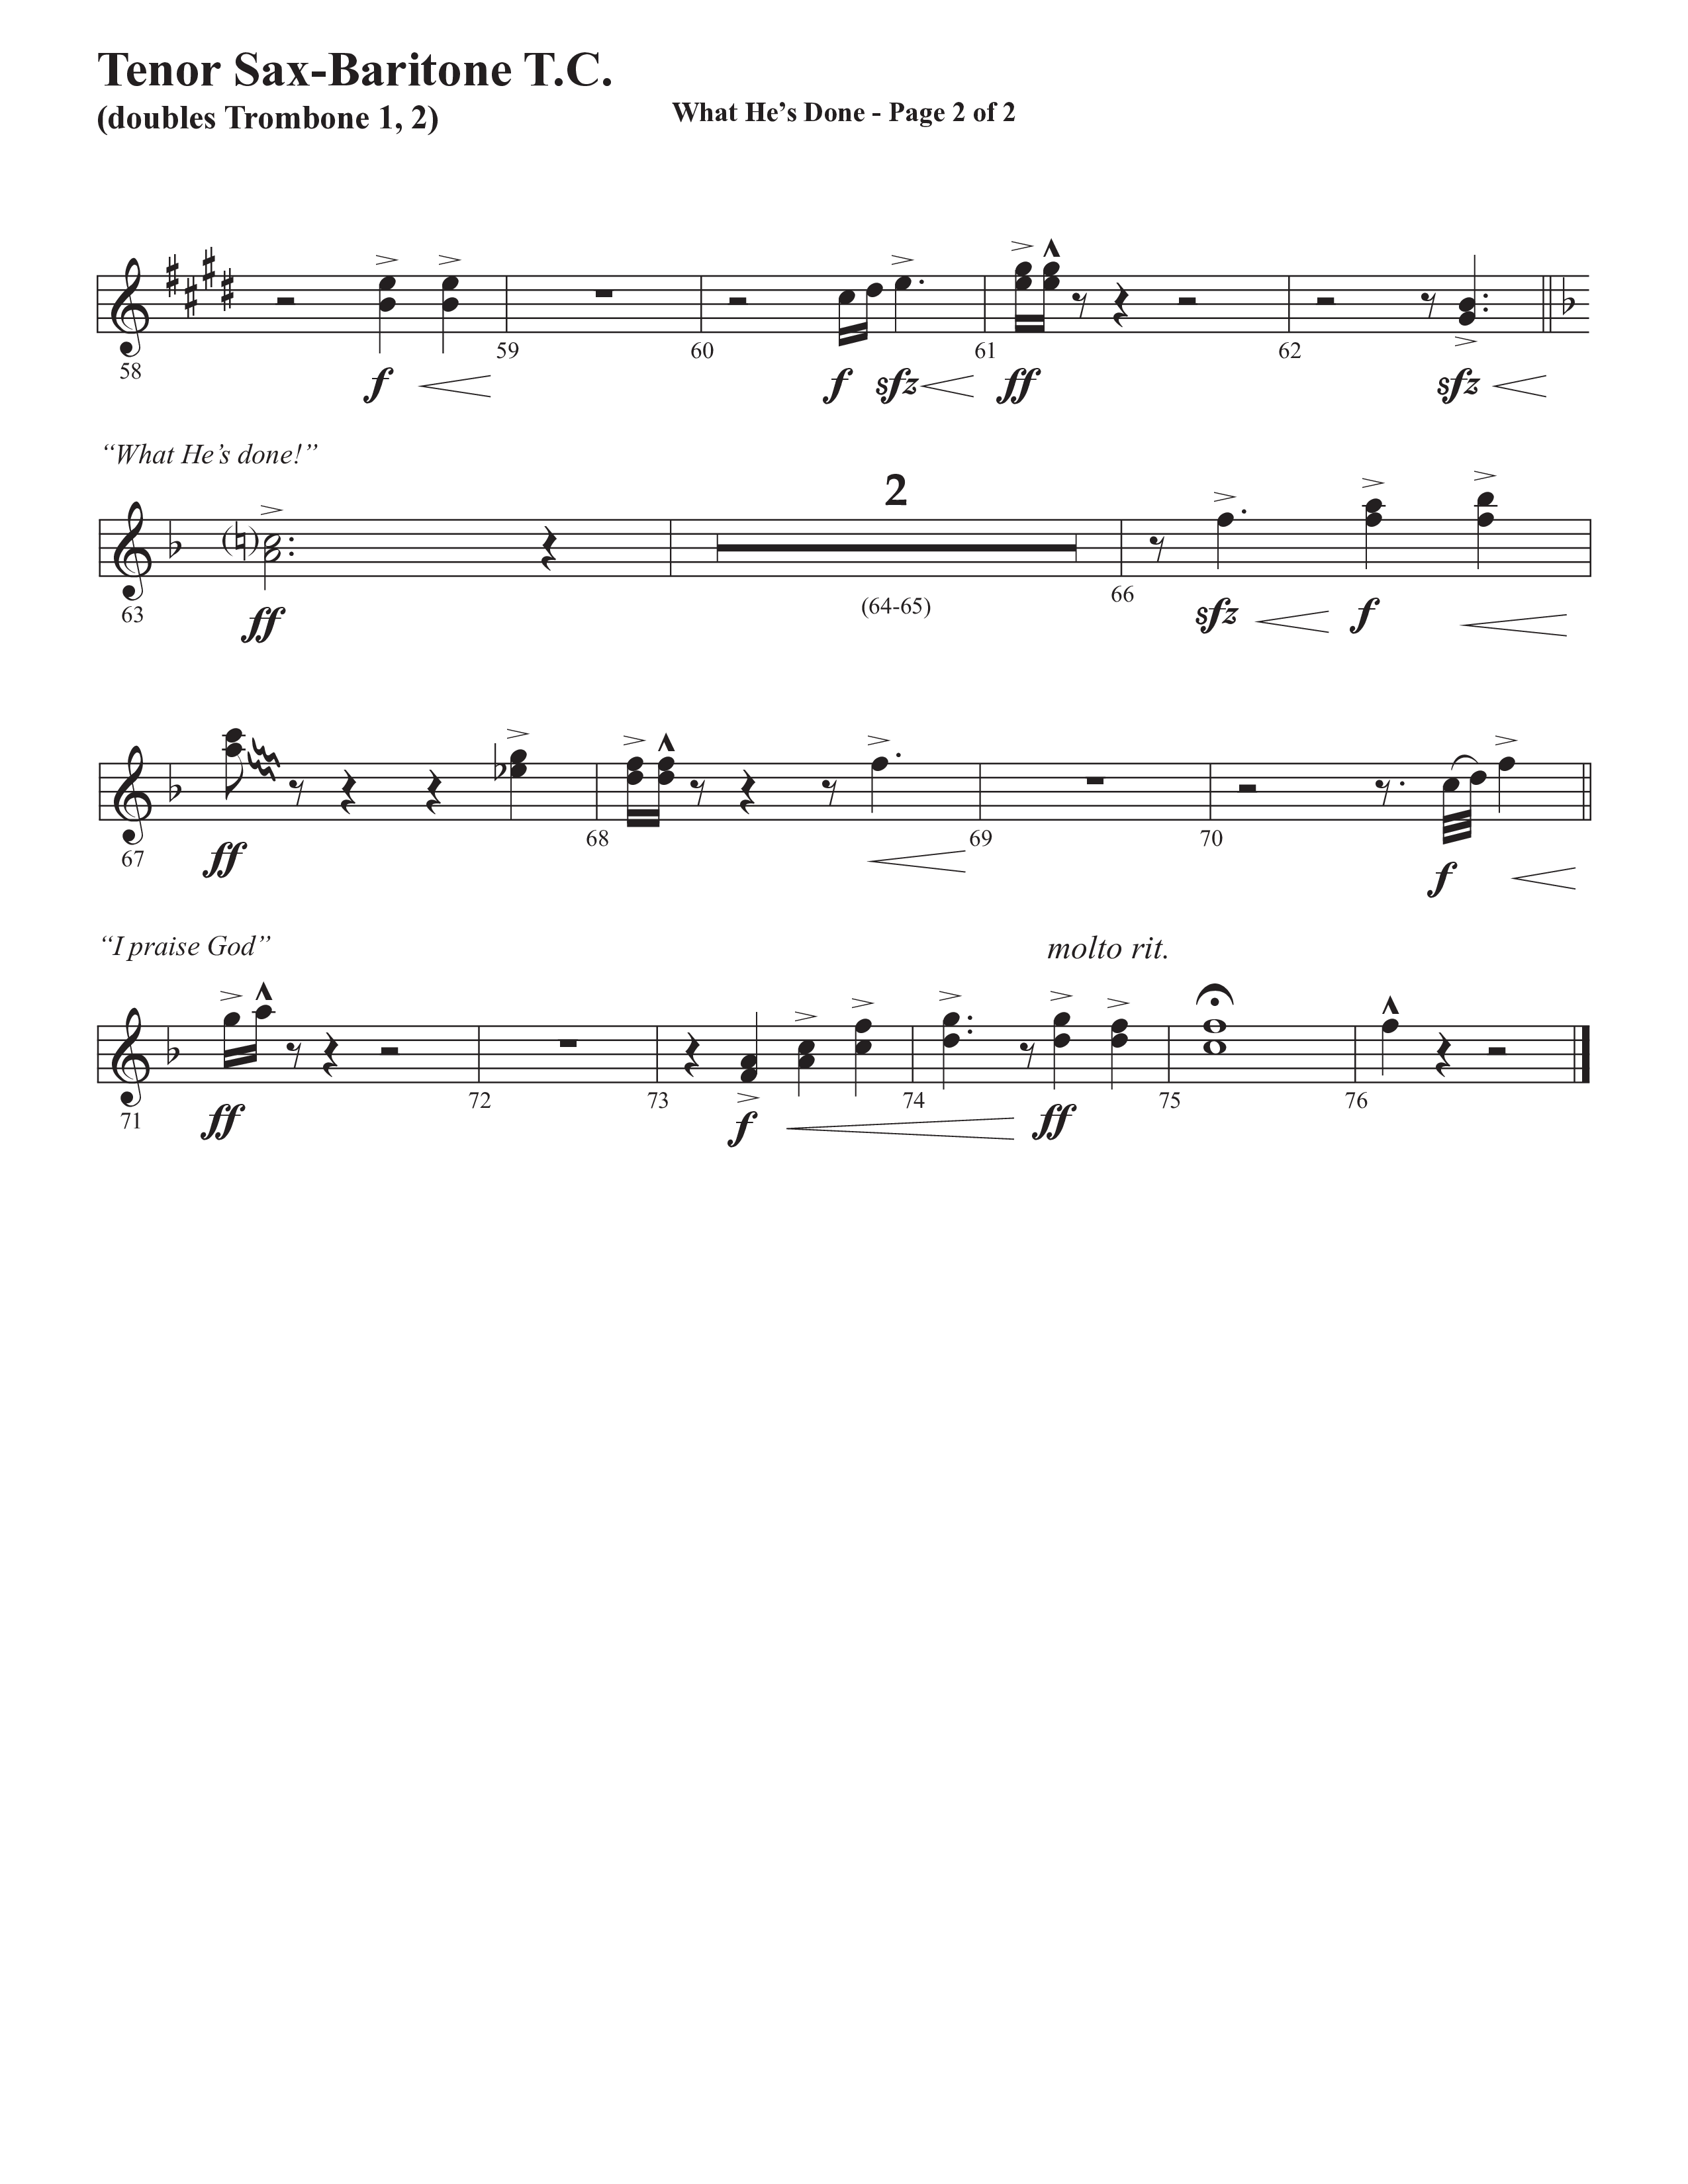 What He's Done (Choral Anthem SATB) Tenor Sax/Baritone T.C. (Semsen Music / Arr. Cliff Duren)